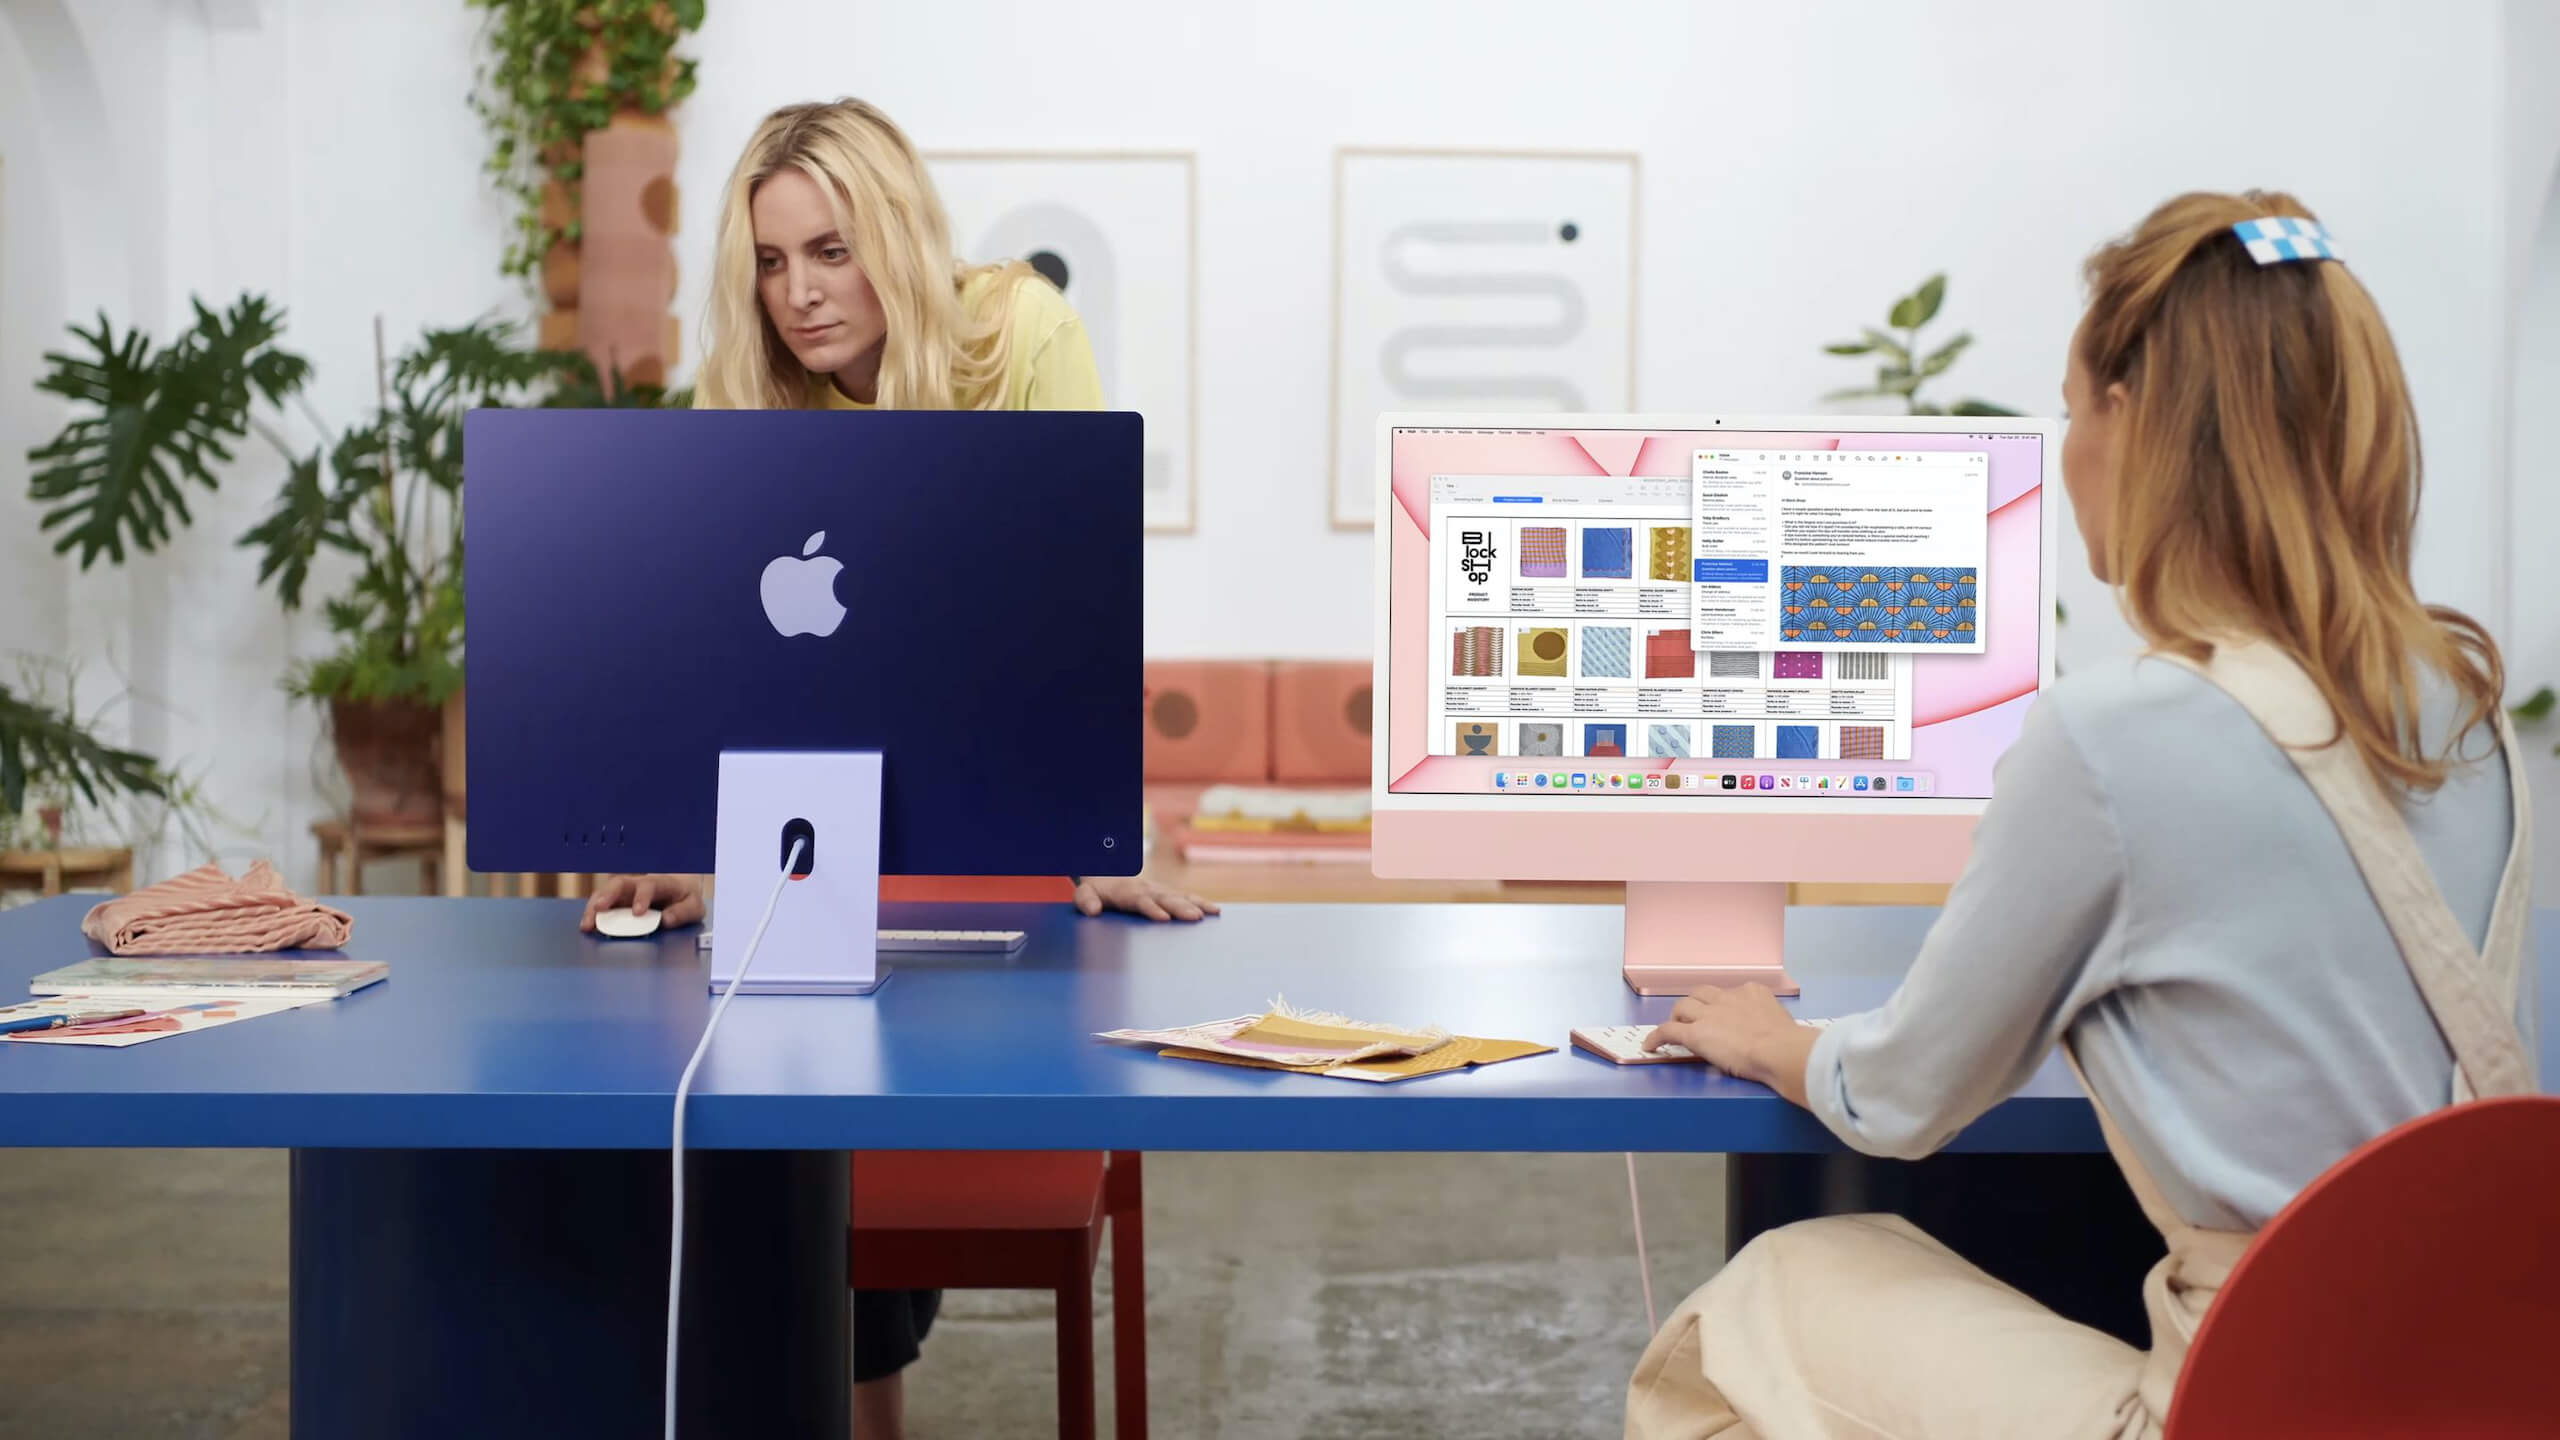 Стартовали продажи iPad Pro и iMac на базе SoC Apple M1